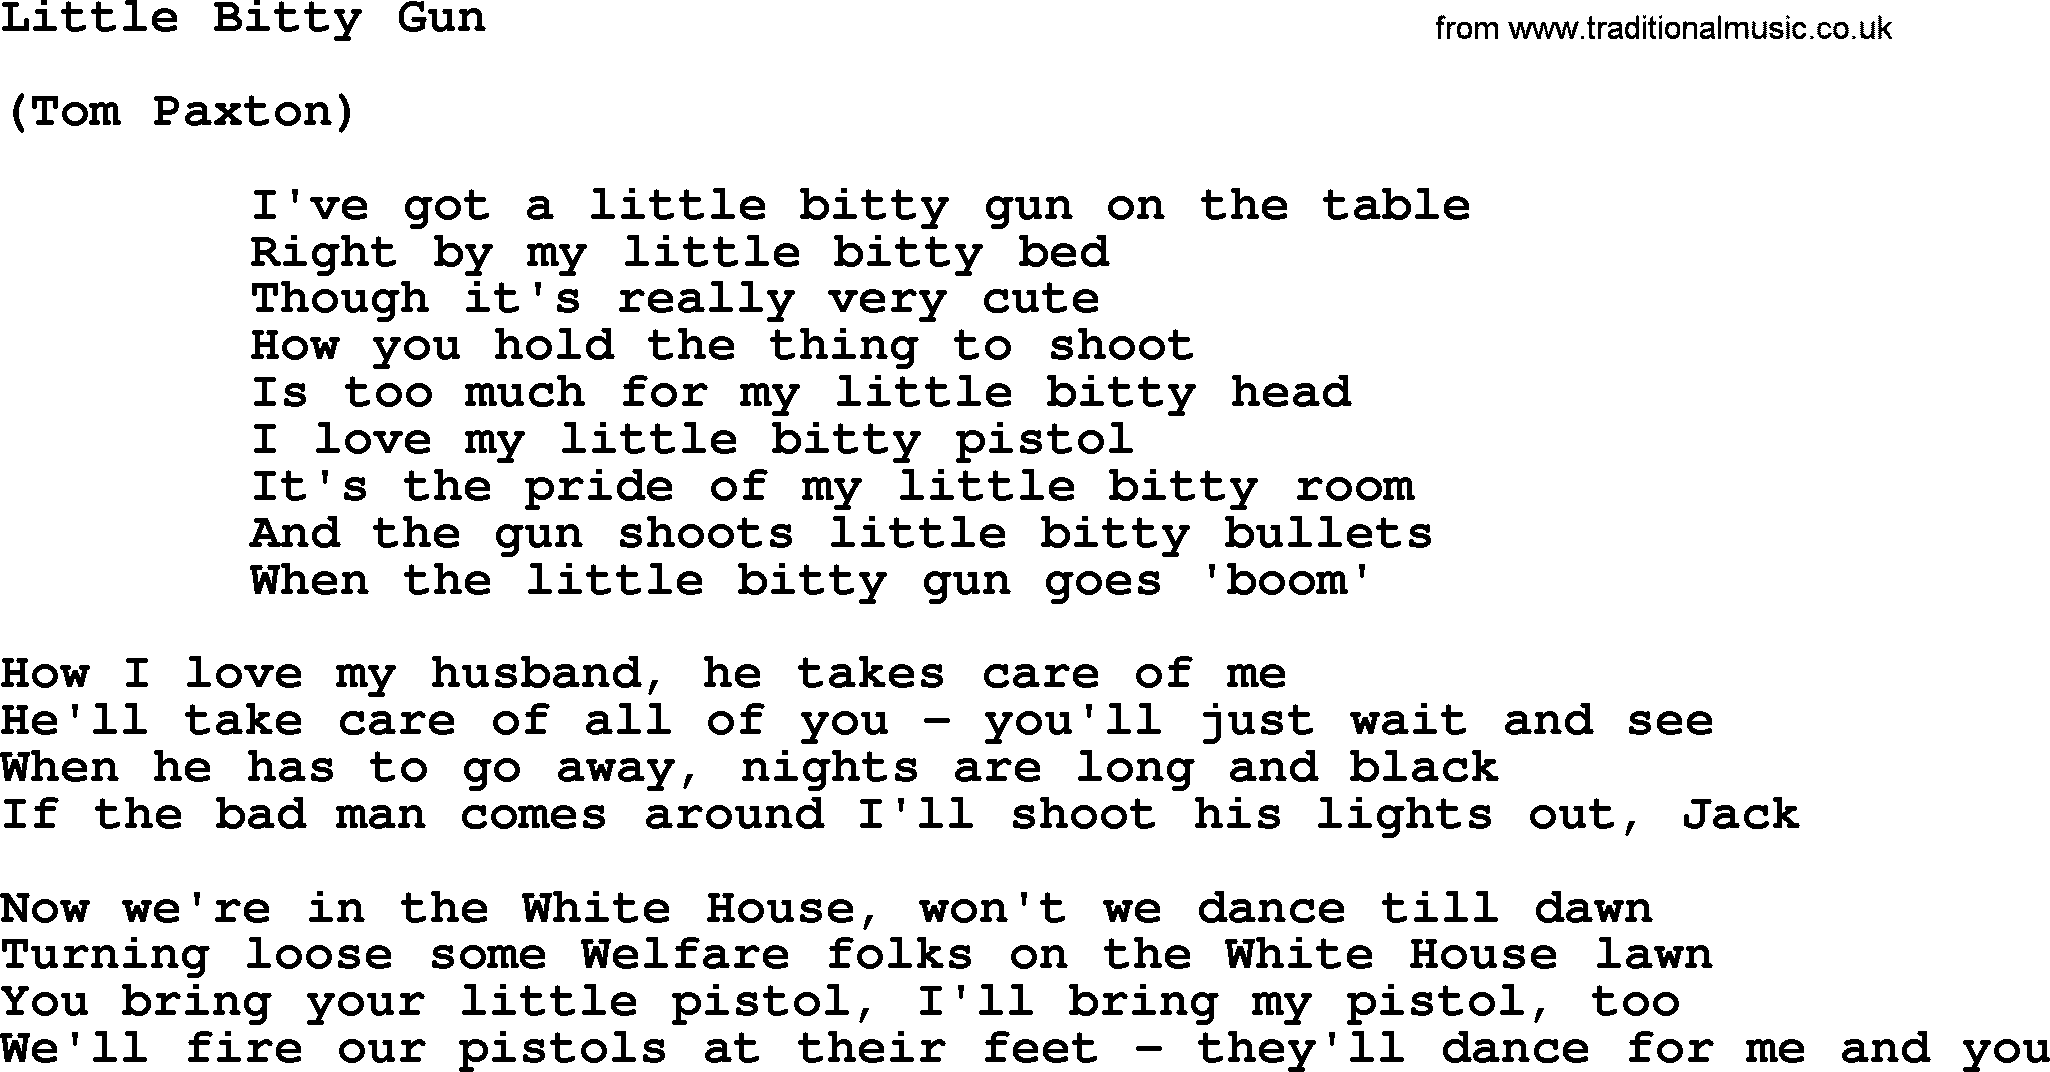 Tom Paxton song: Little Bitty Gun, lyrics